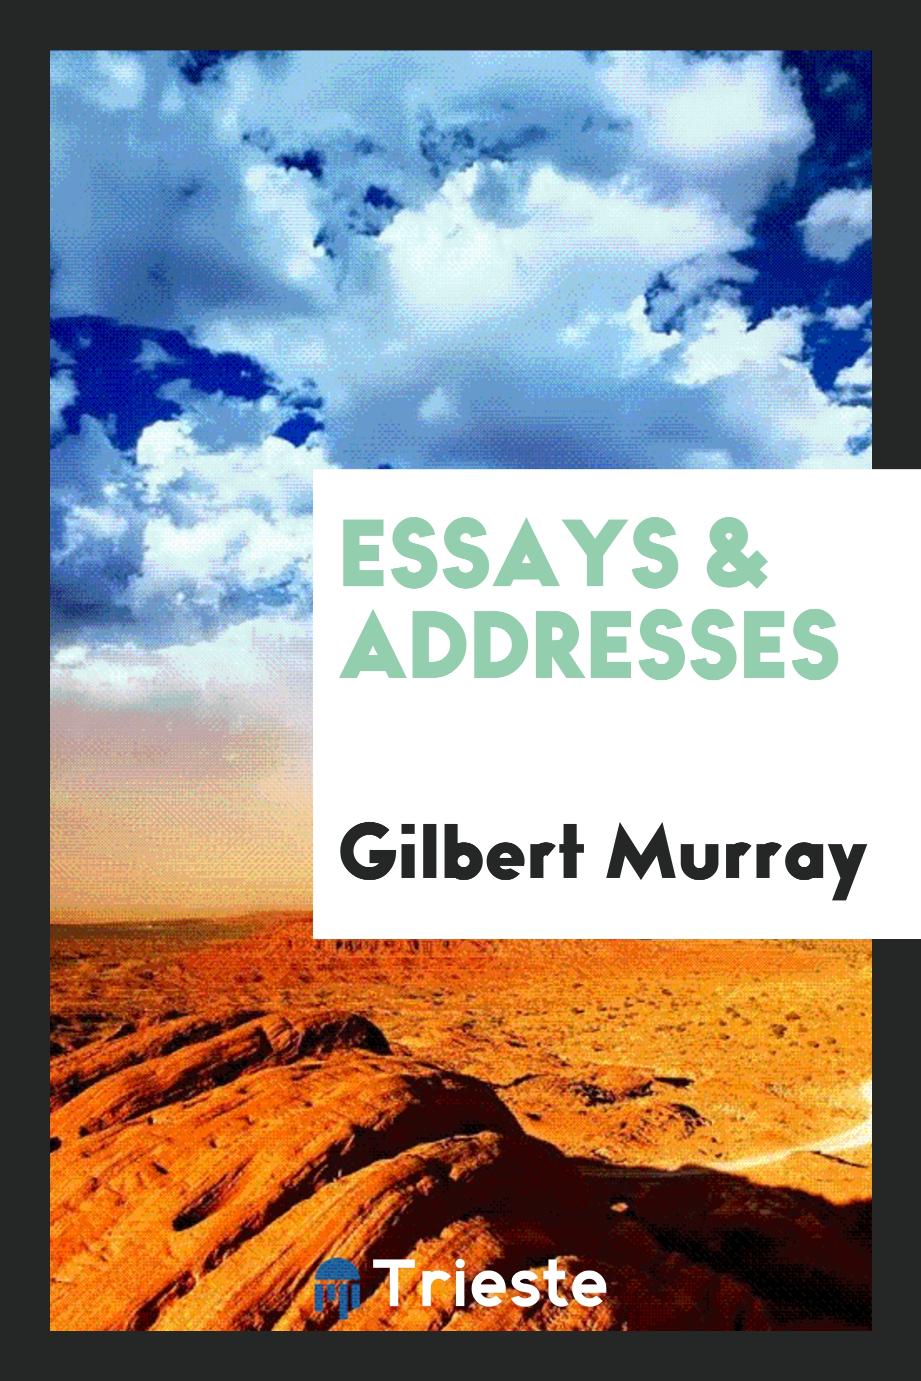 Essays & addresses